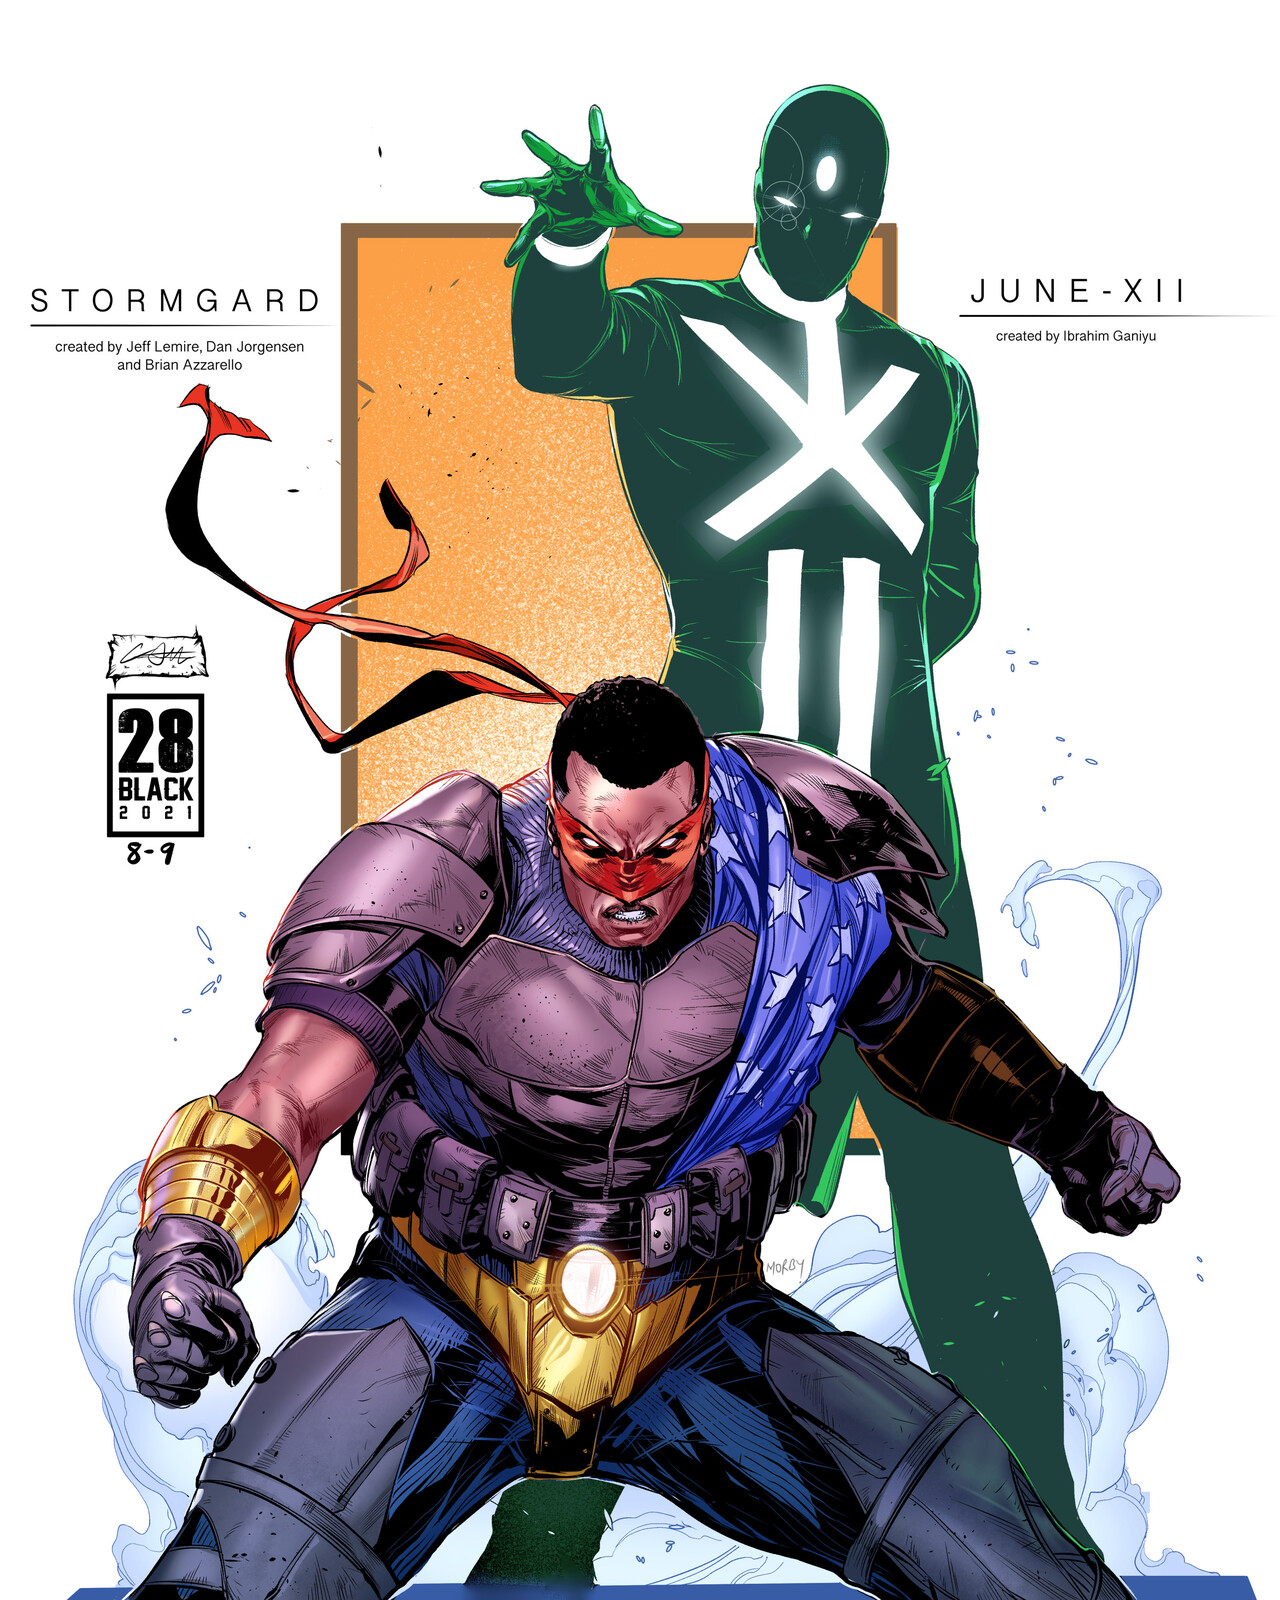 Stormgard and June XII.